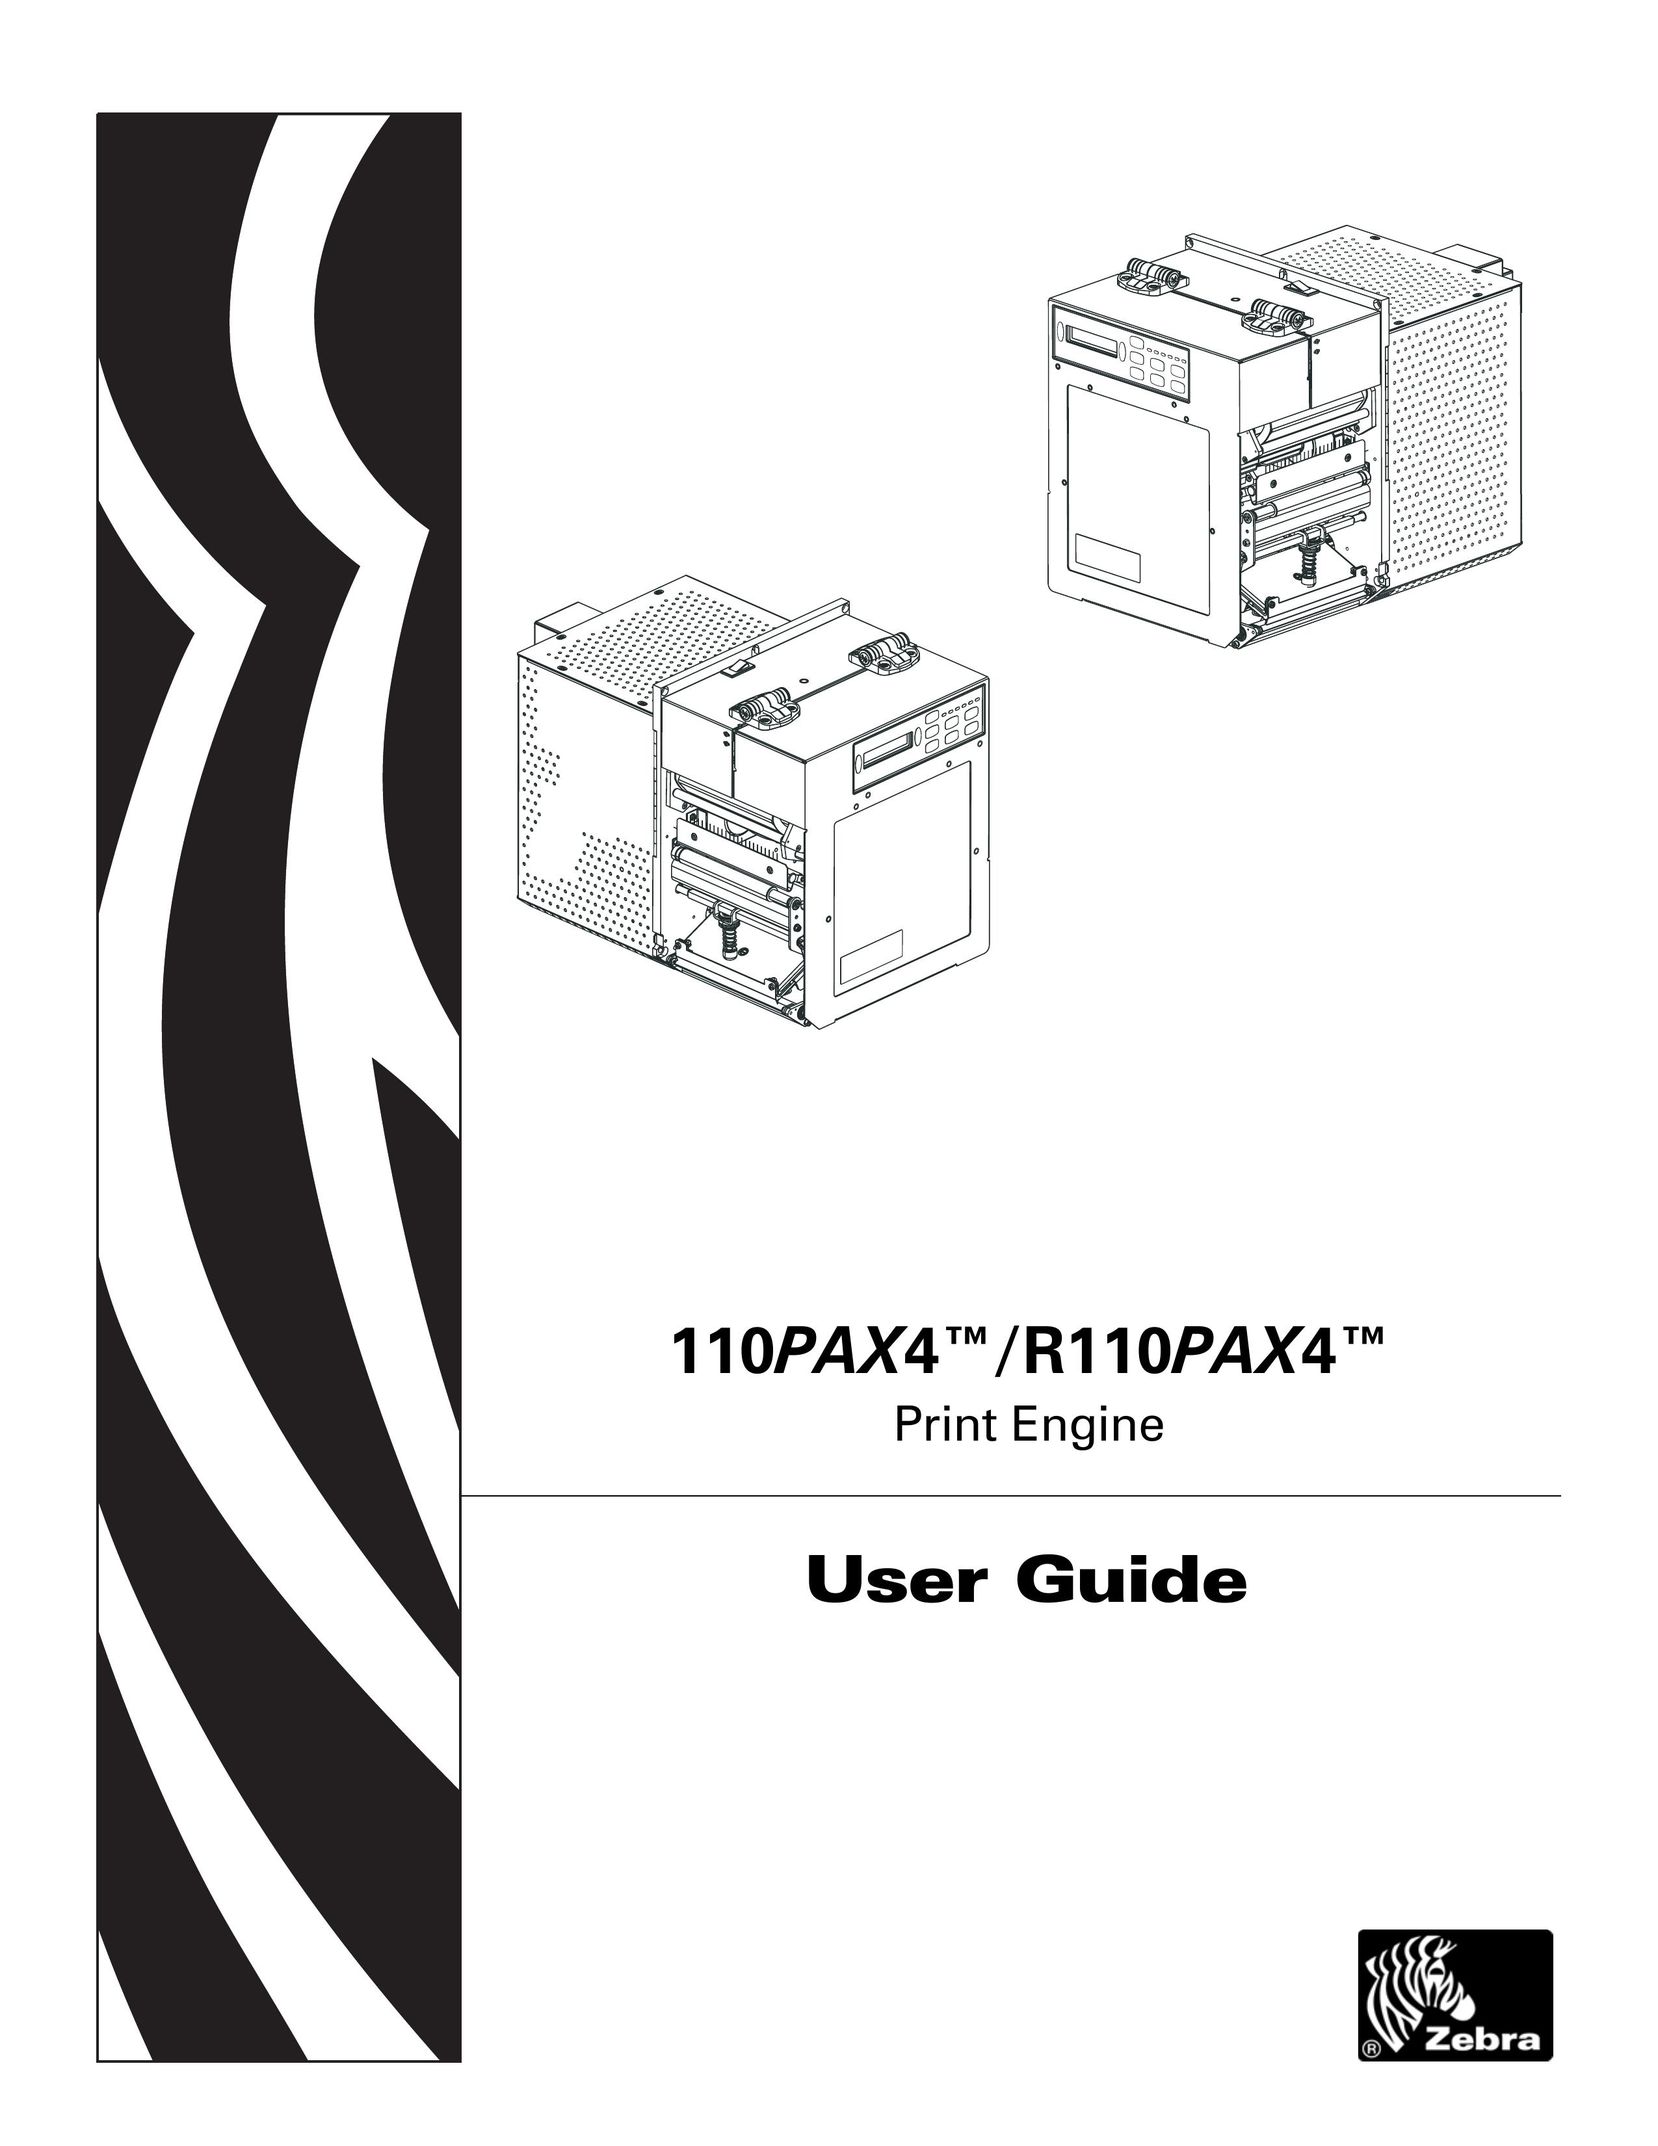 Zebra Technologies R110PAX4 Printer Accessories User Manual